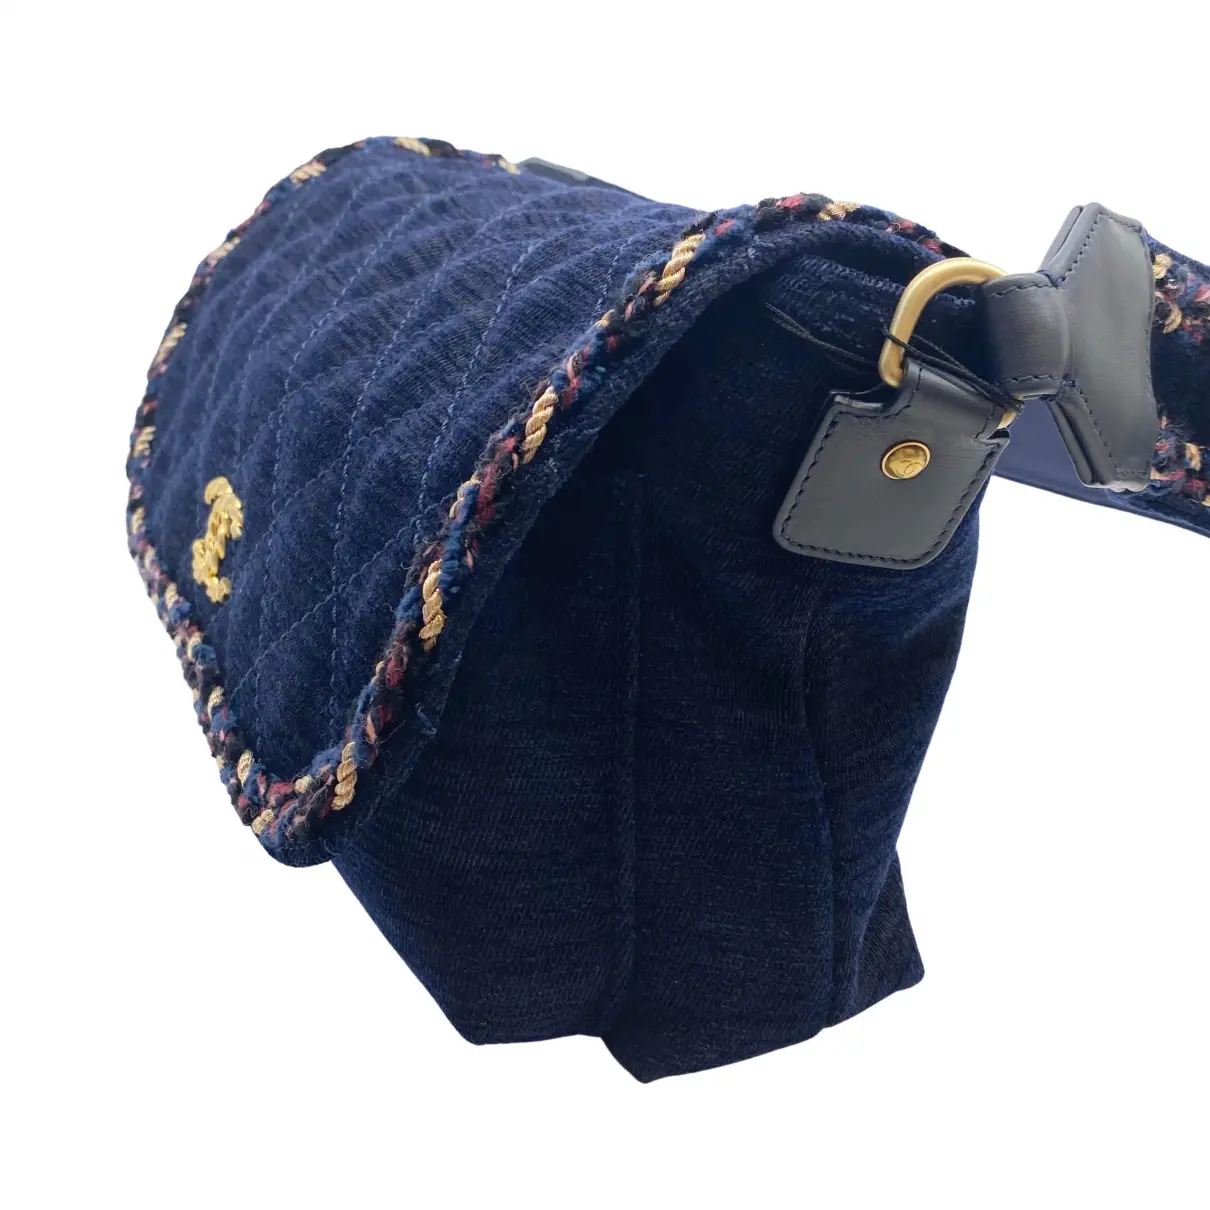 Buy Chanel Wool handbag online